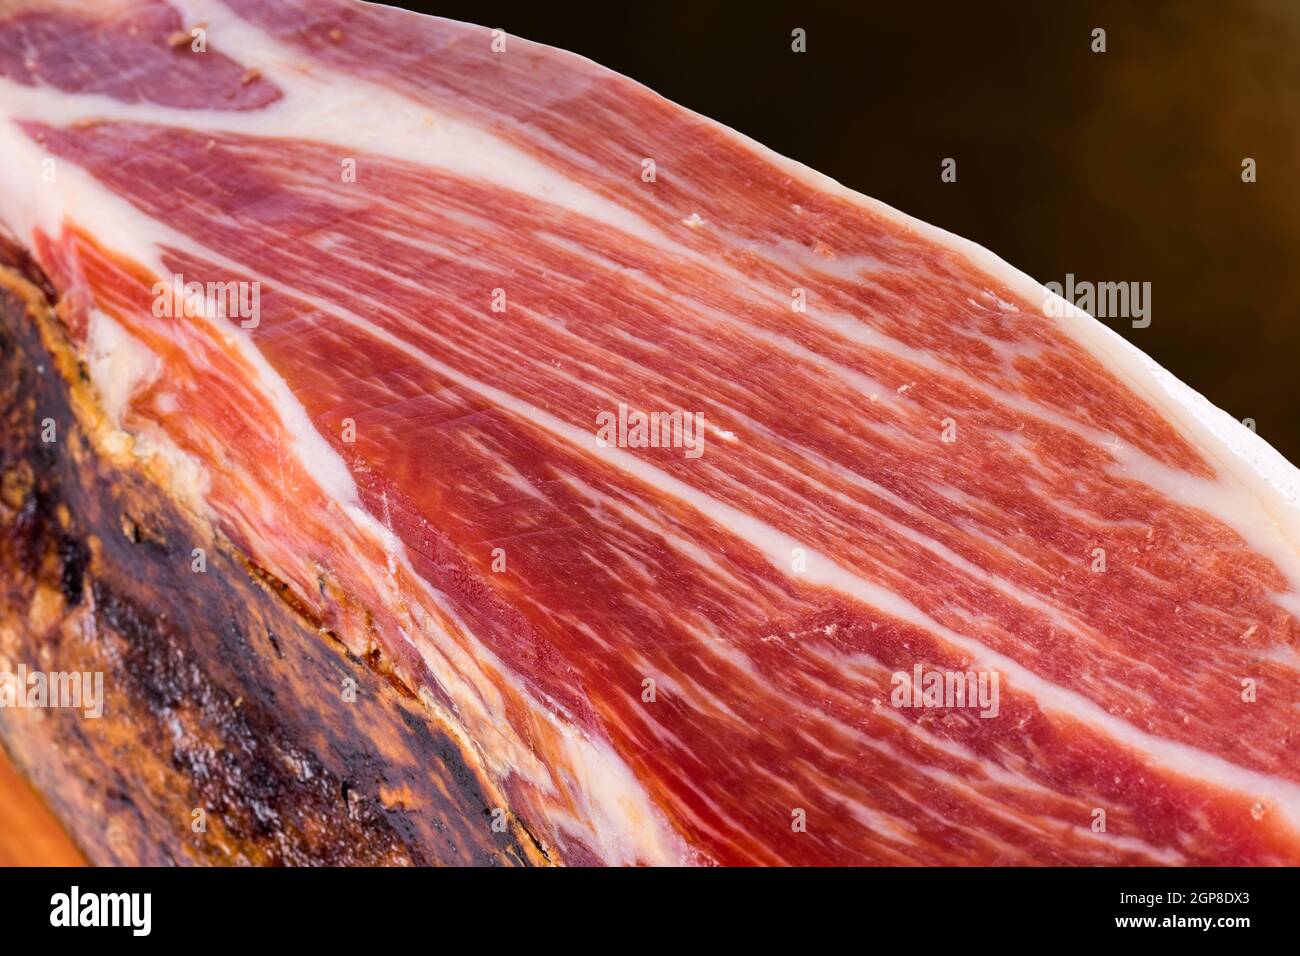 Macro close up of cured Spanish Iberian Bellota pork ham. Stock Photo